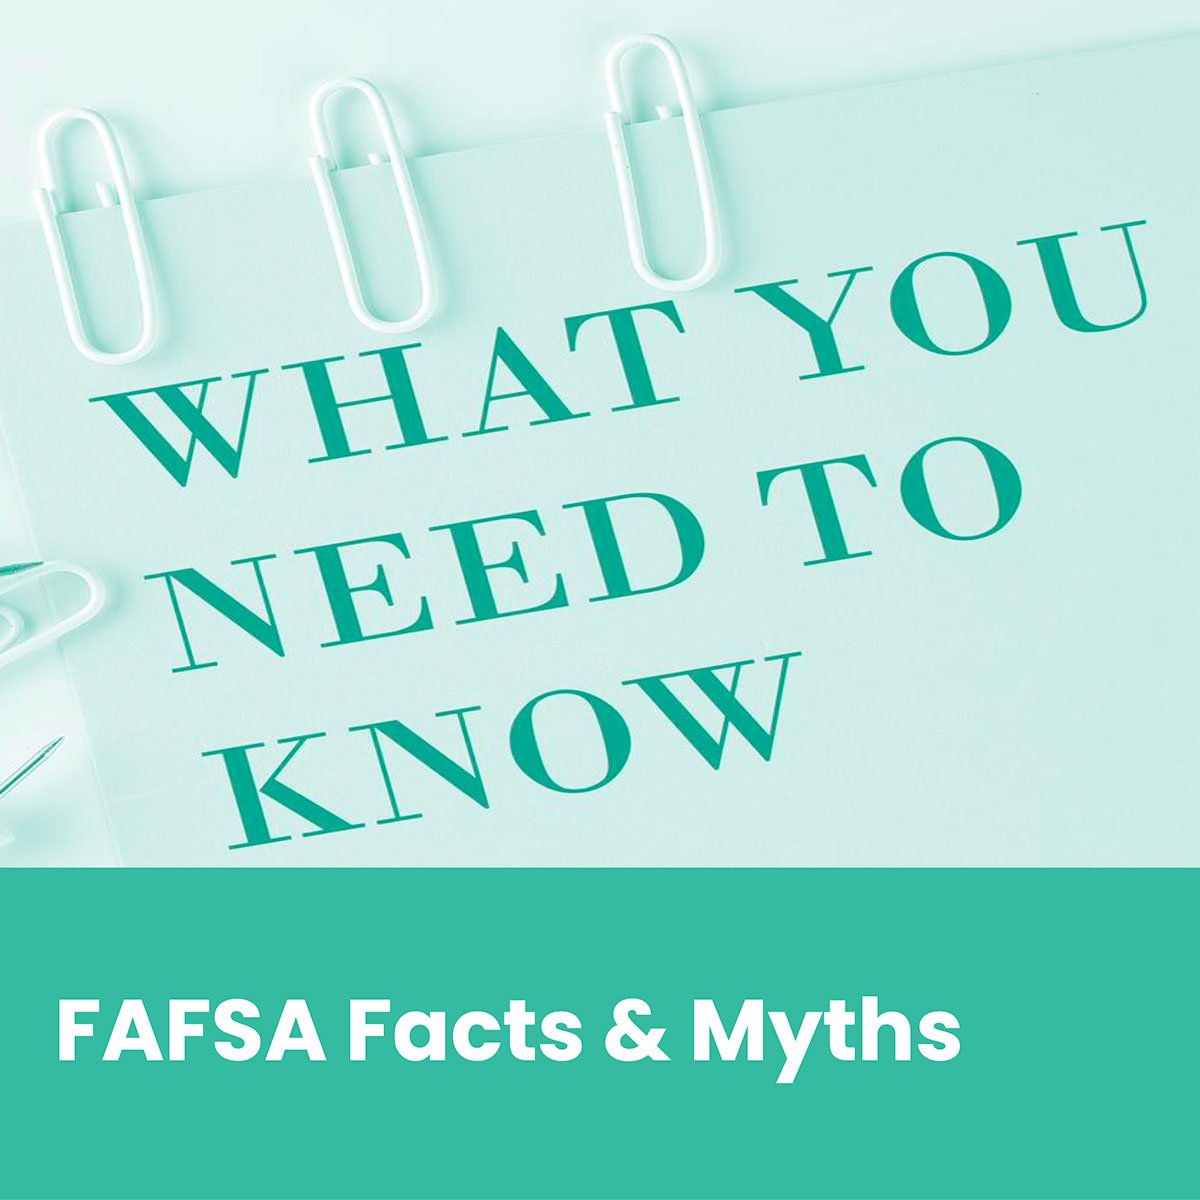 FAFSA FACTS & MYTHS